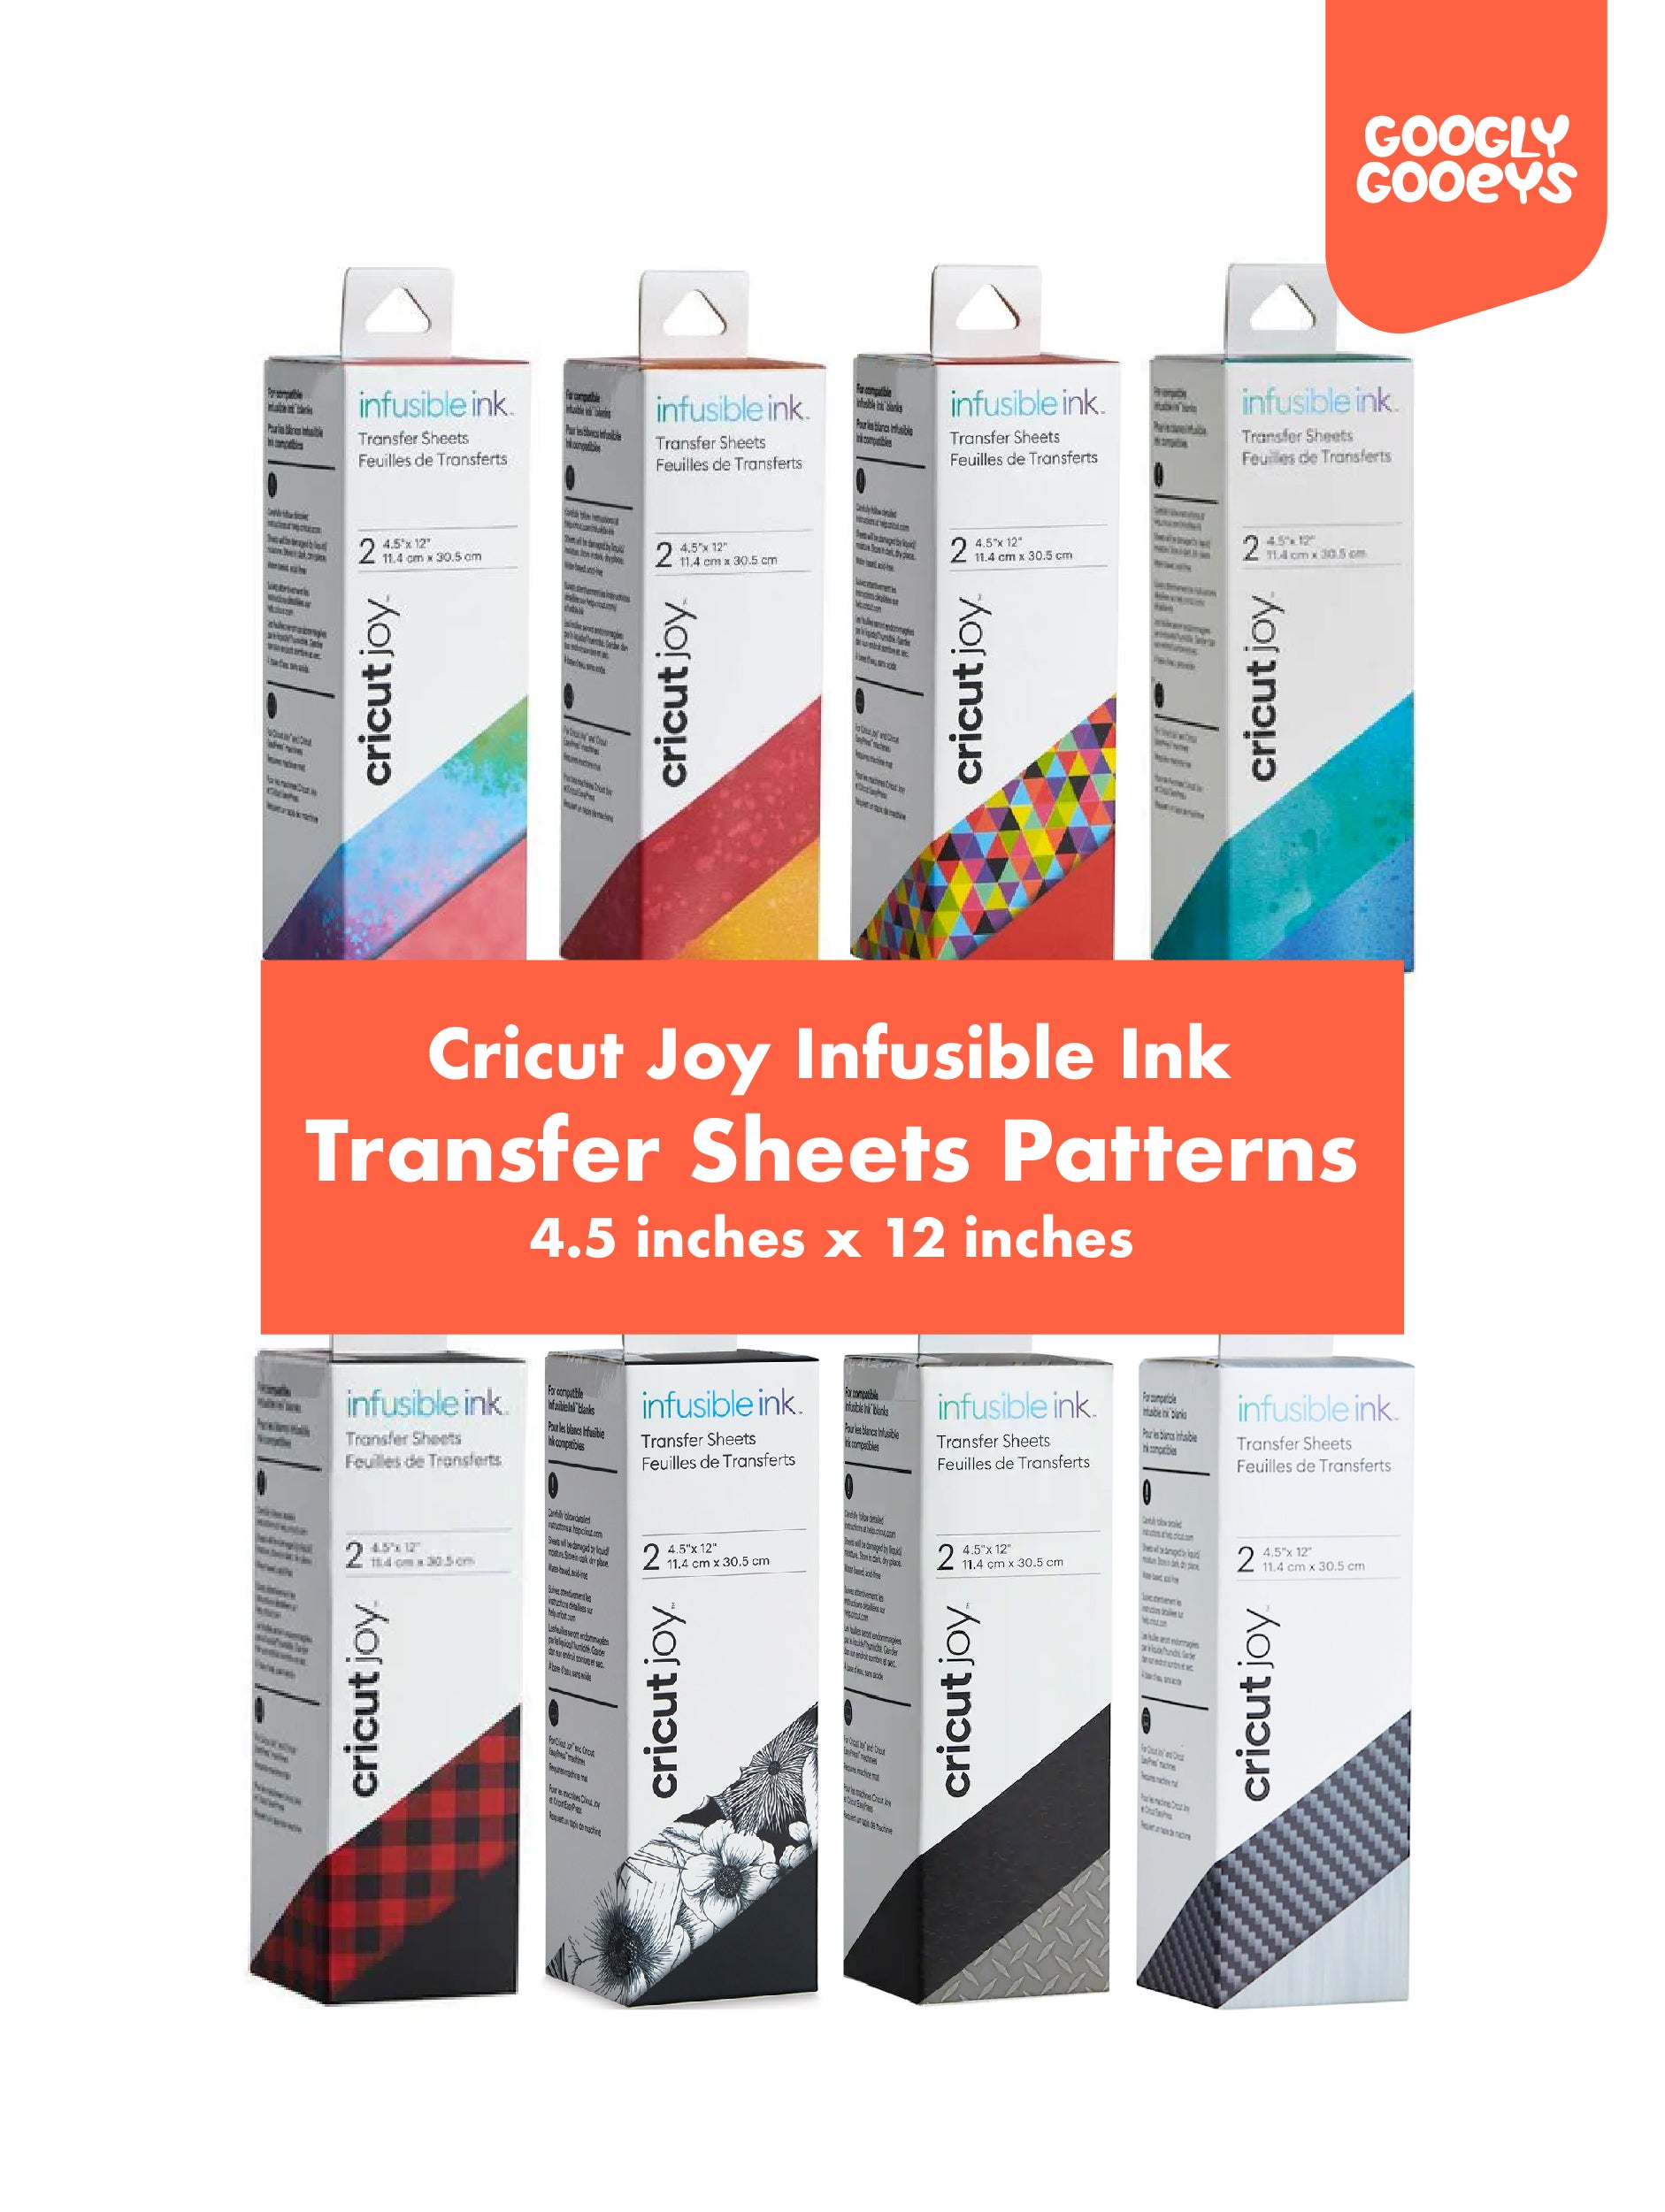 Cricut Joy Infusible Ink Transfer Sheets Patterns